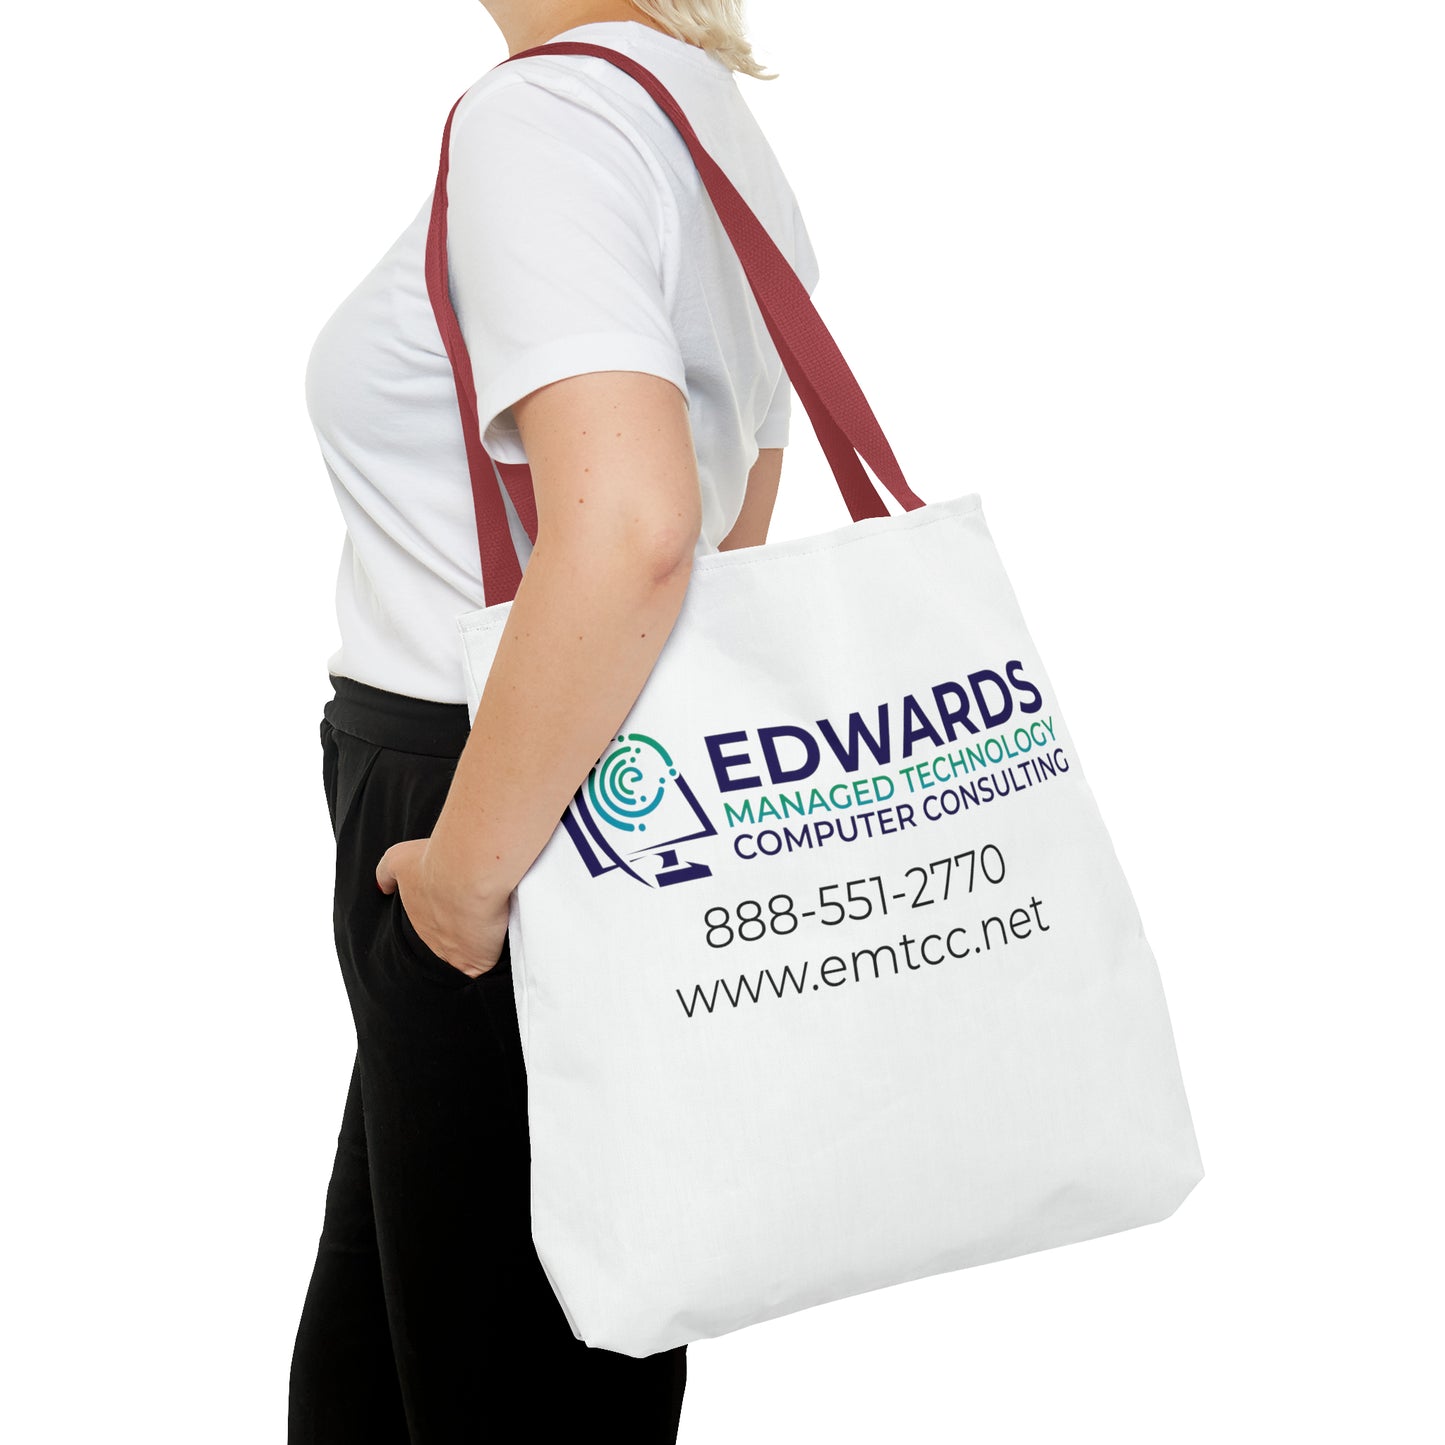 Edwards Managed Technology Tote Bag (AOP)